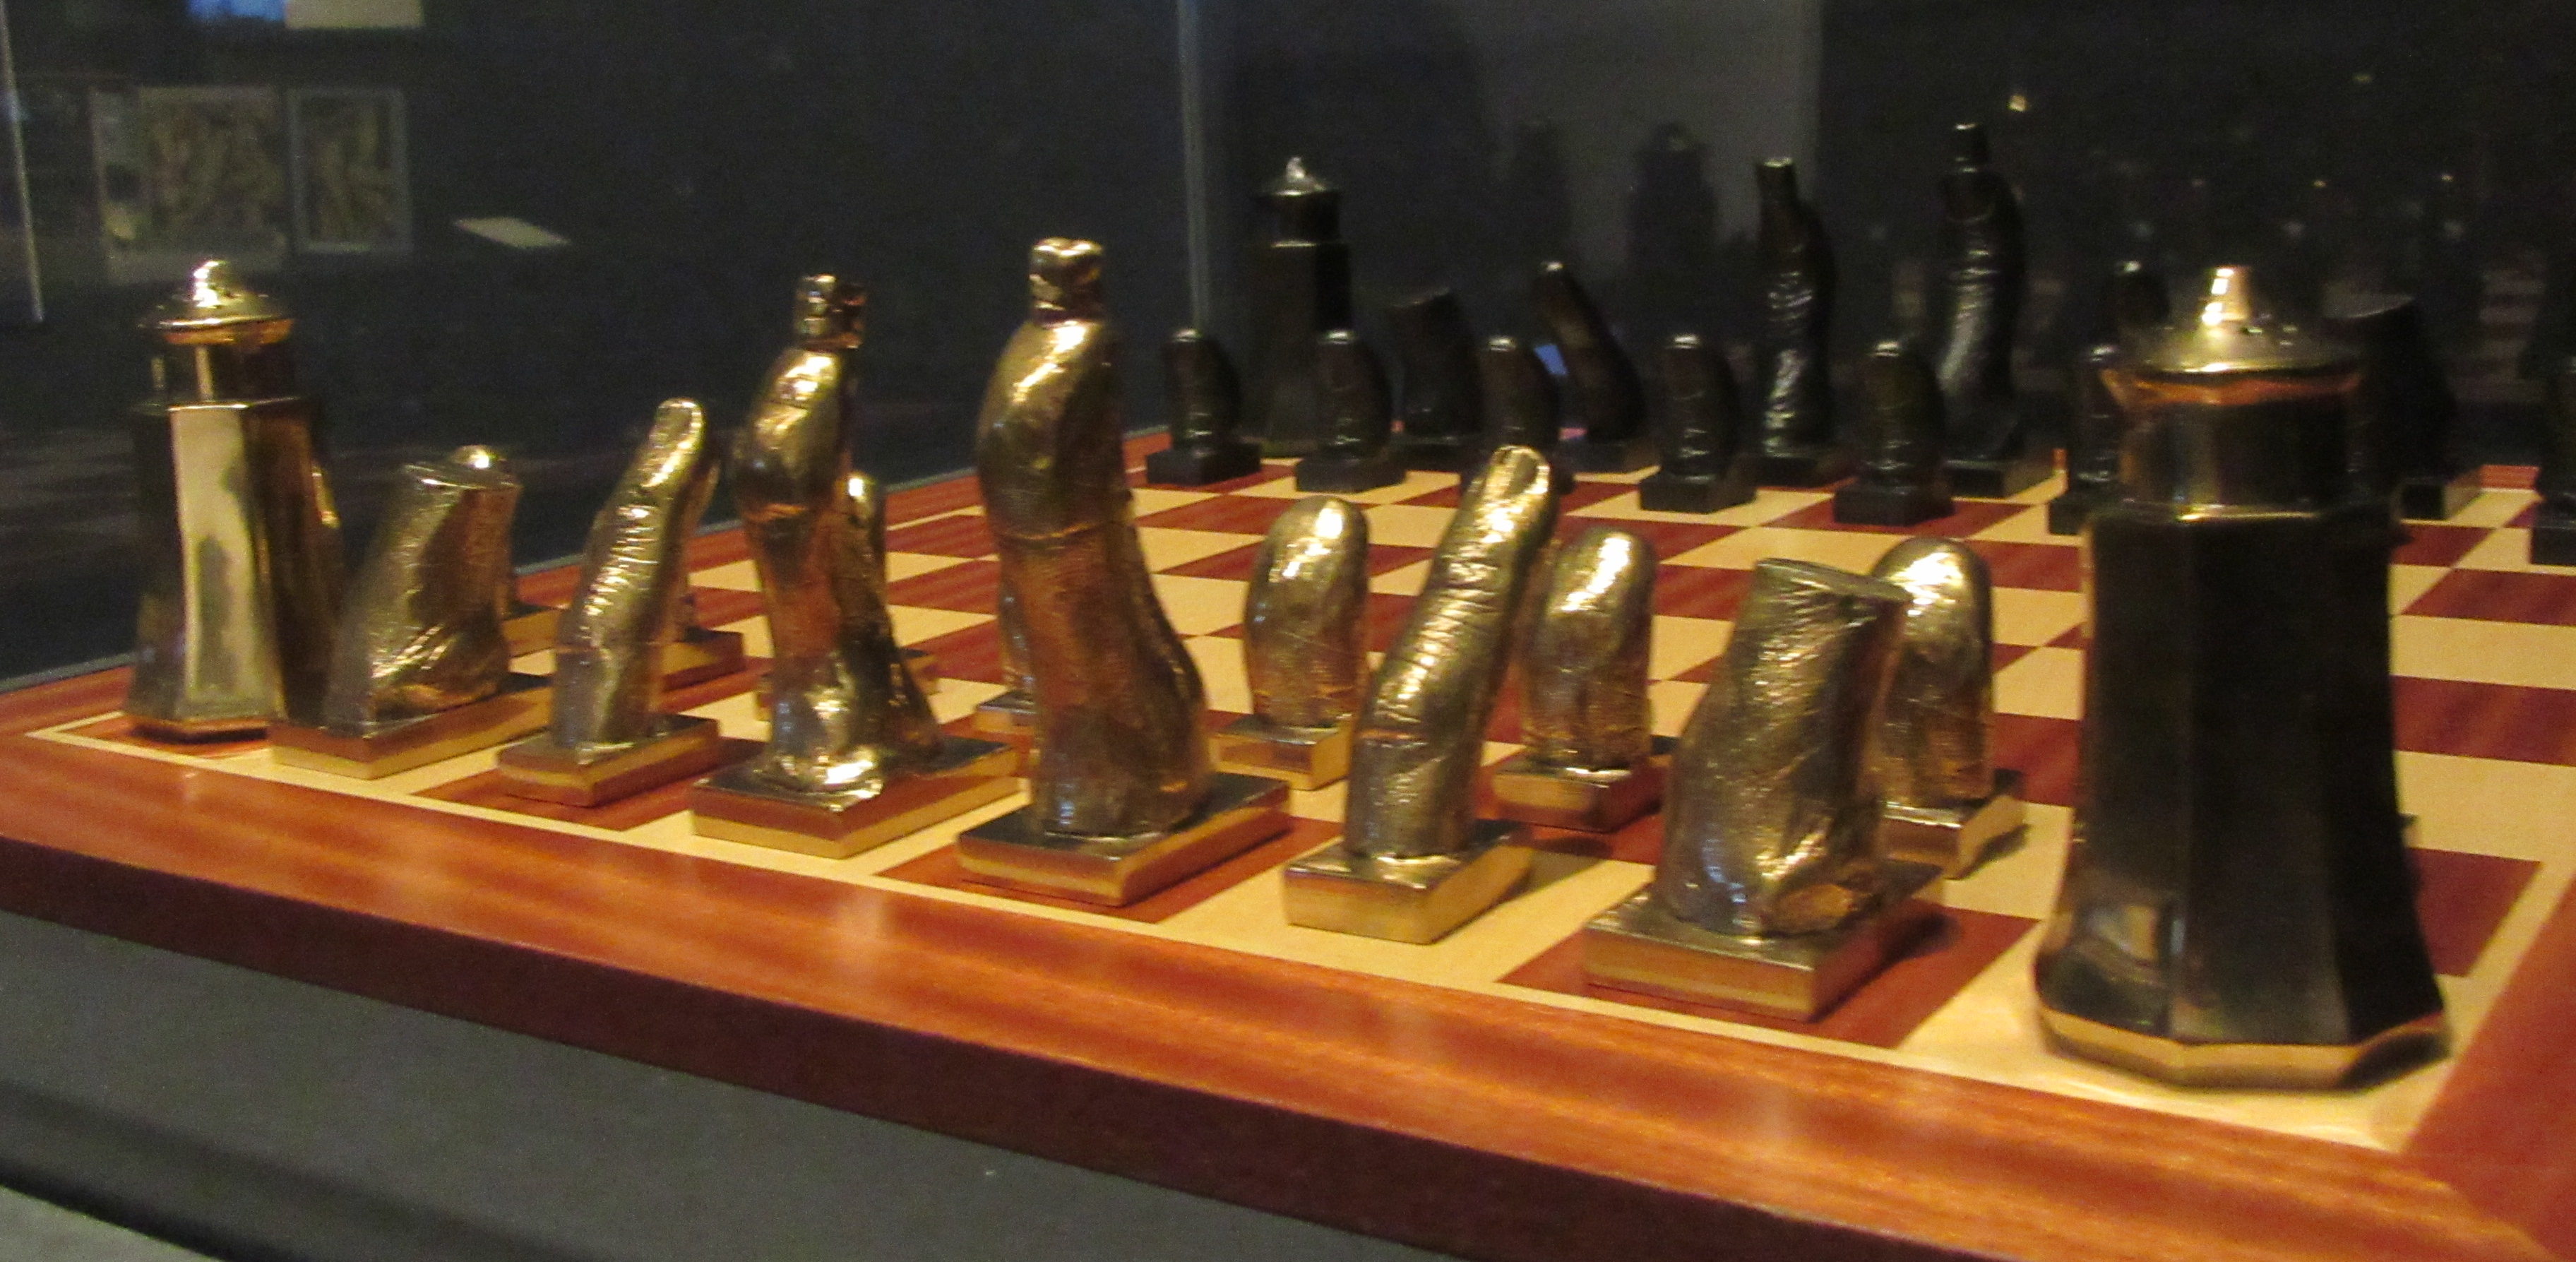 Dali/Duchamp Chess Day Set for March 29 - St. Pete Life Magazine